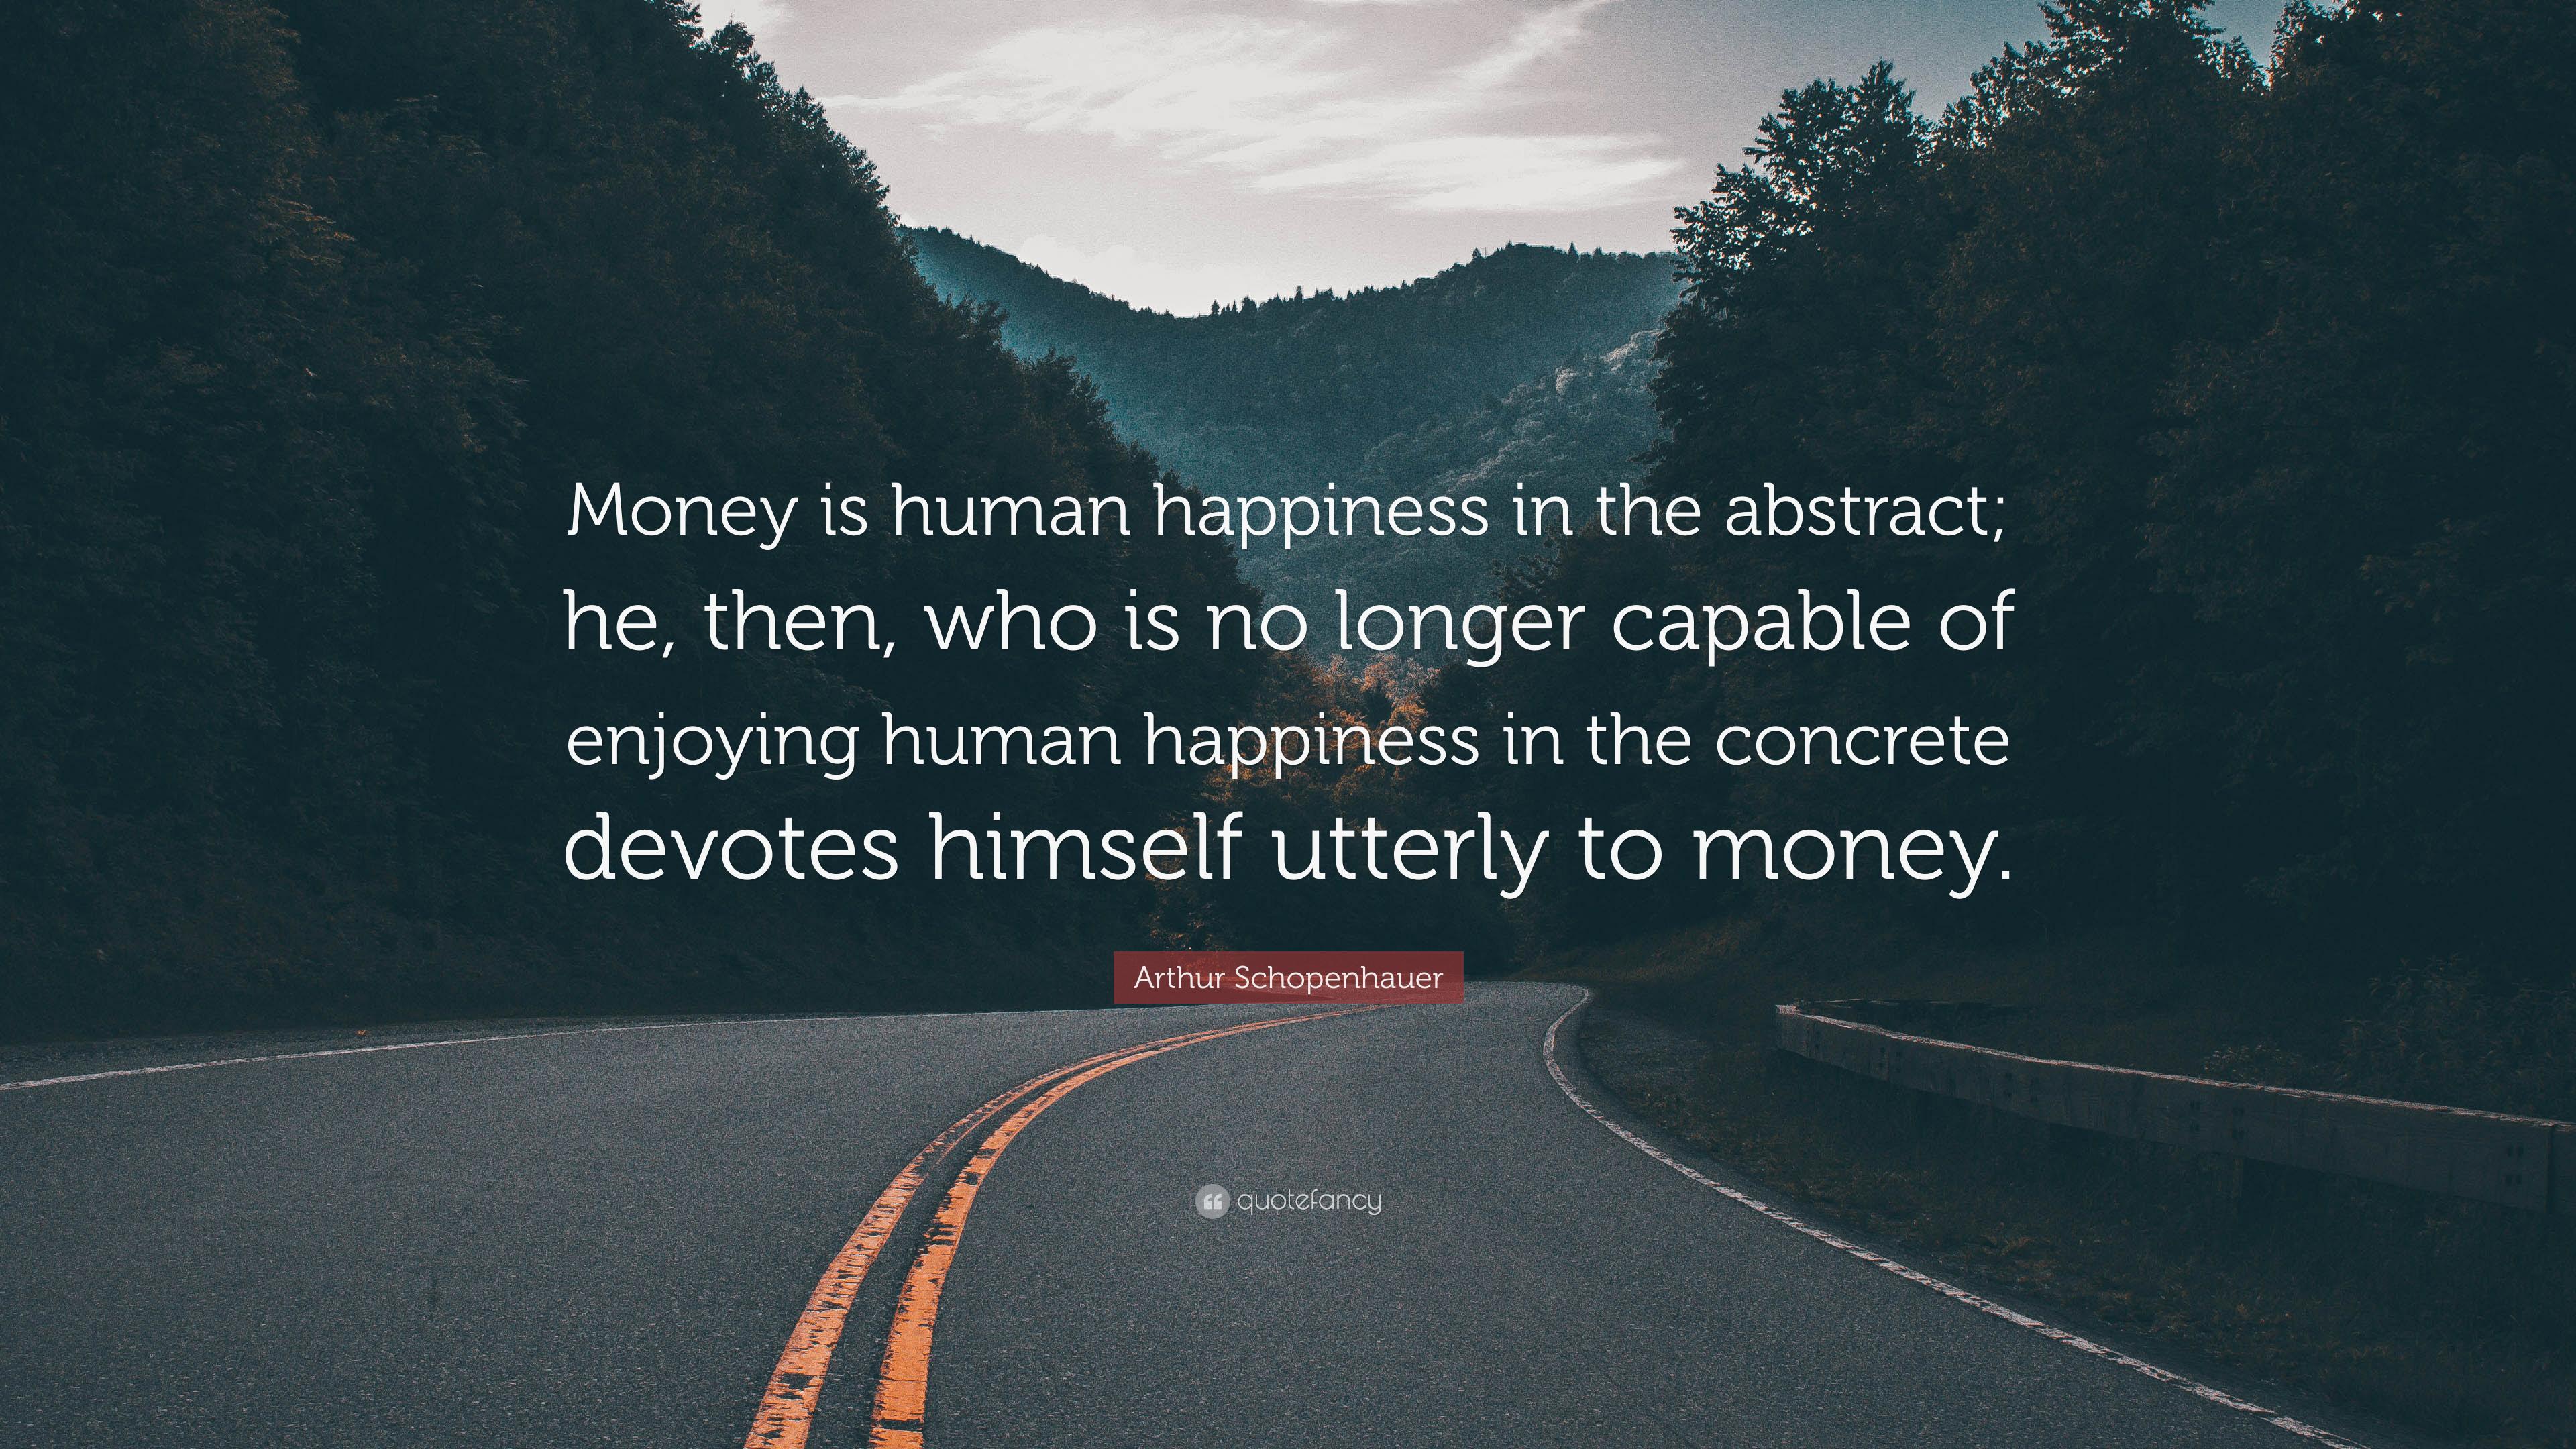 Arthur Schopenhauer Quote: "Money is human happiness in the.